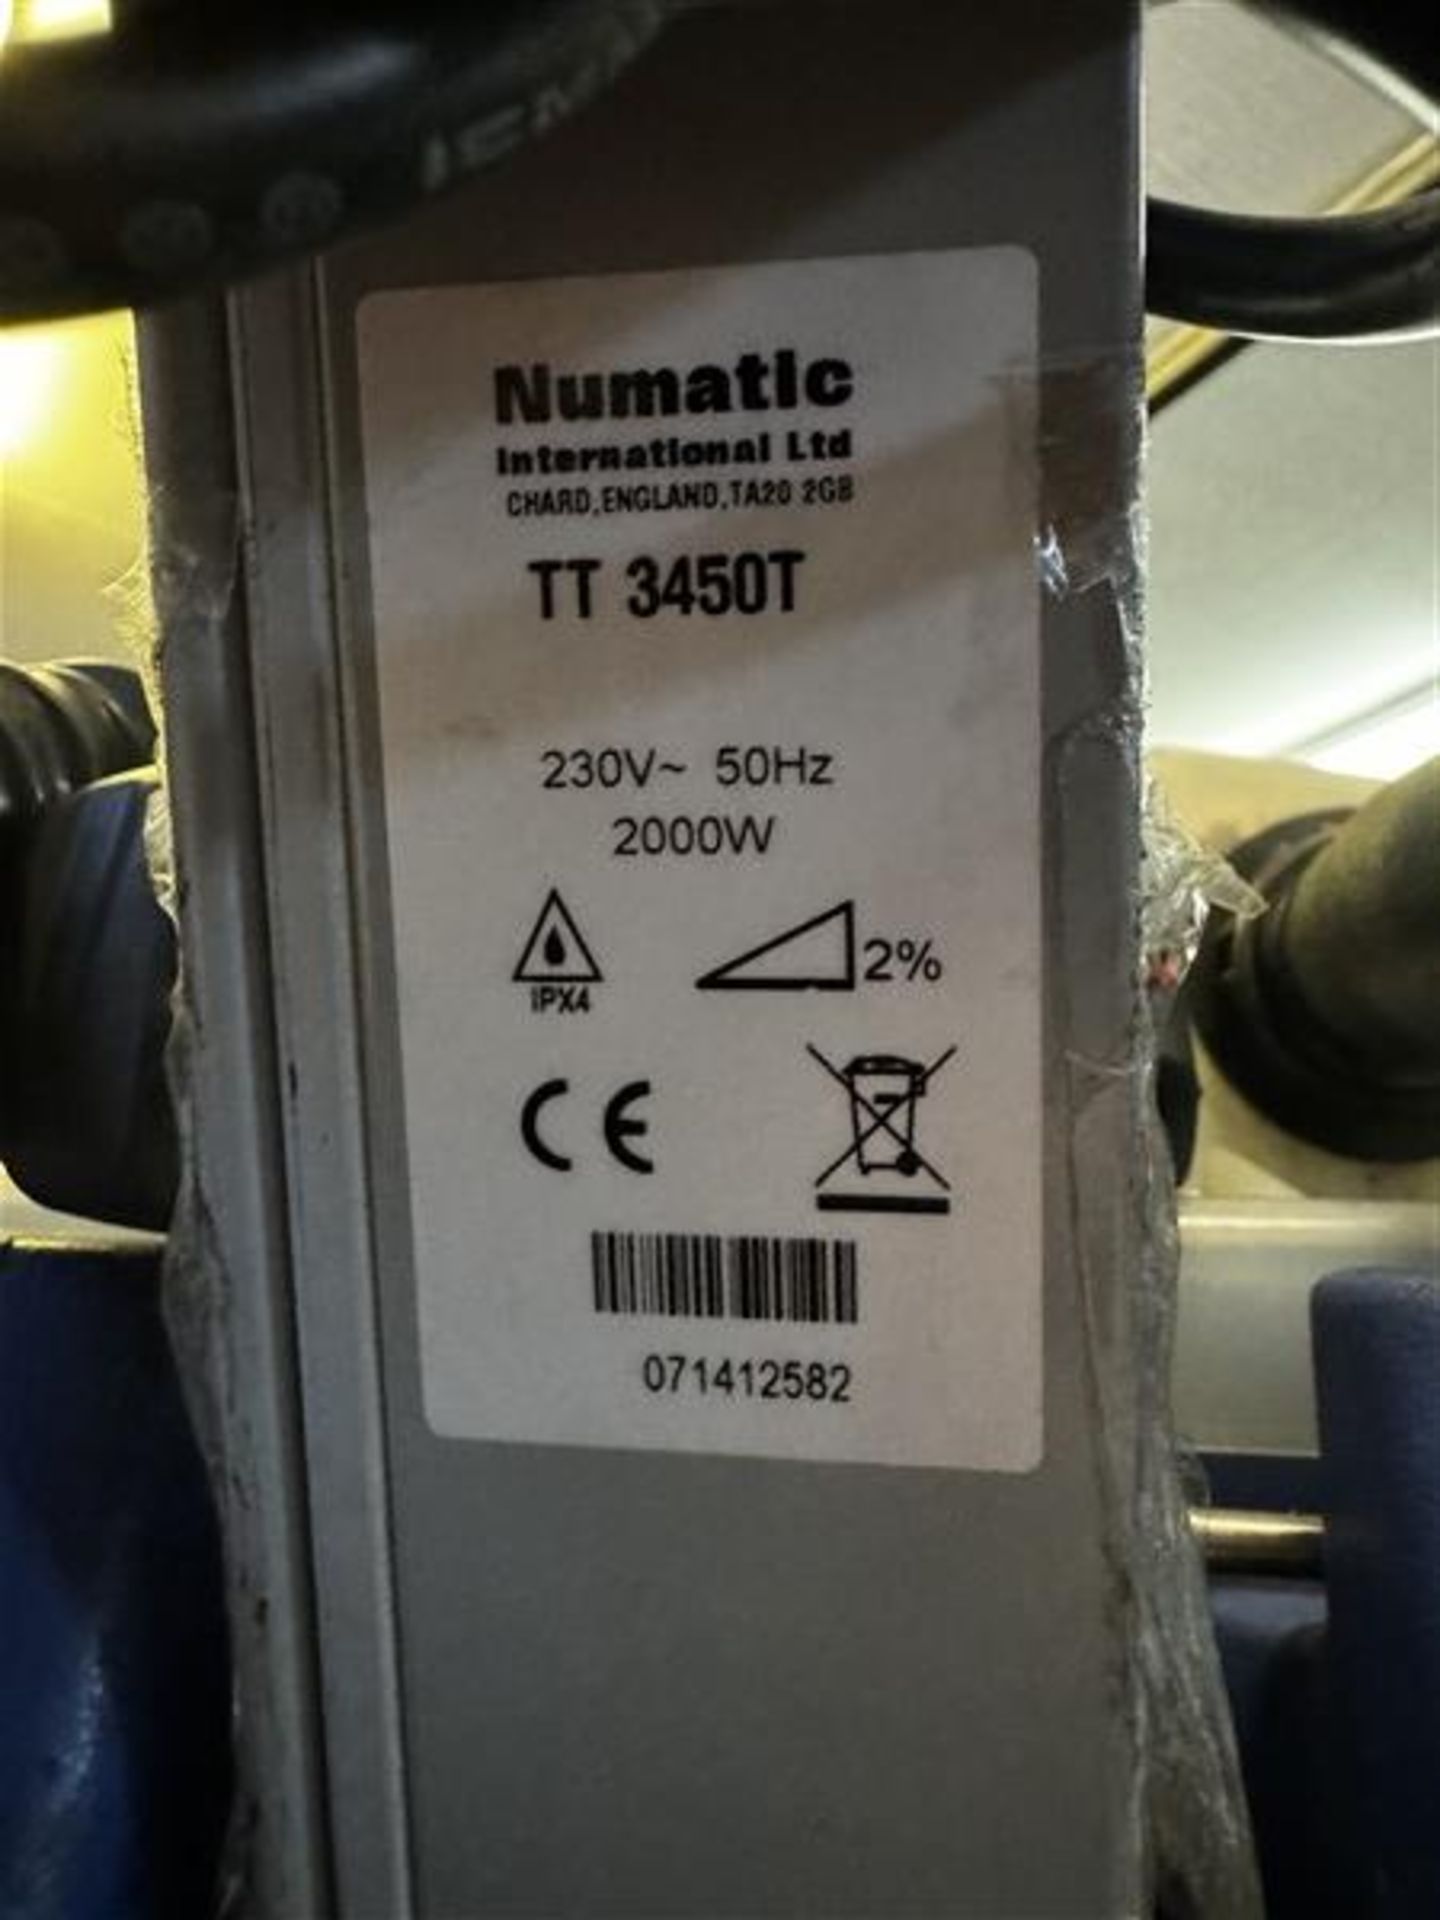 Numatic floor cleaner, model TT3450T - Image 4 of 6